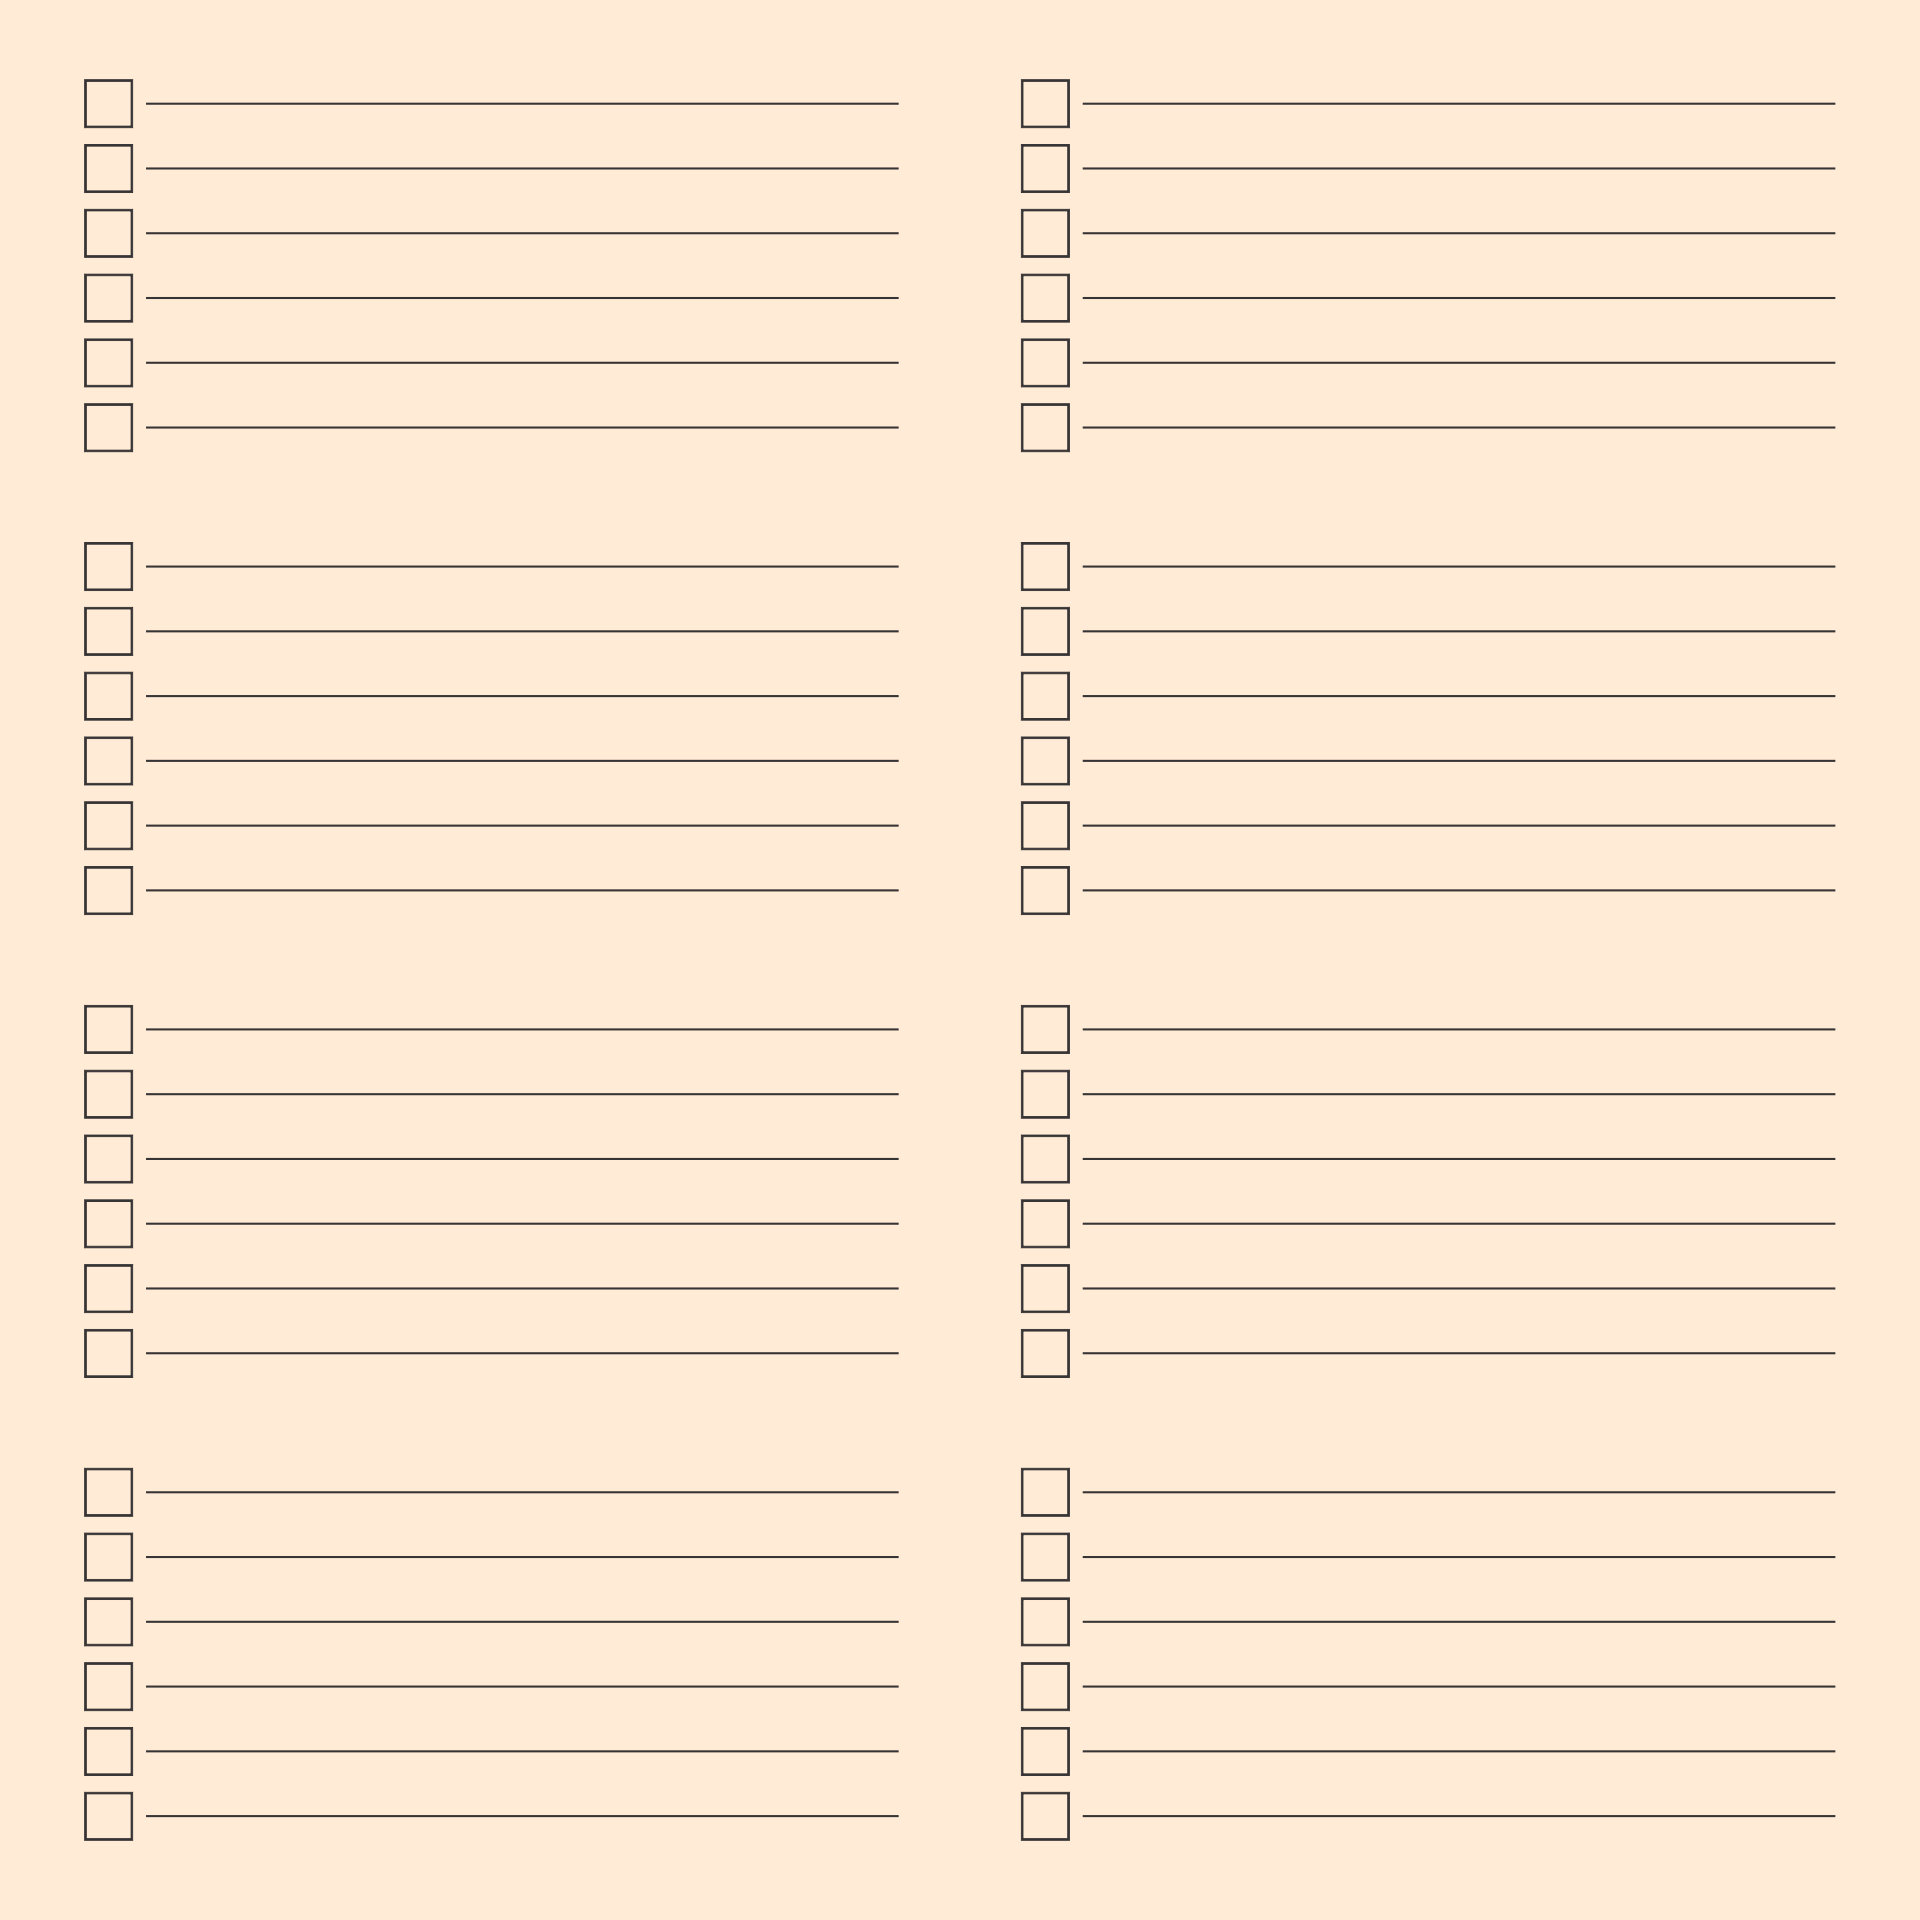 Blank List Printable